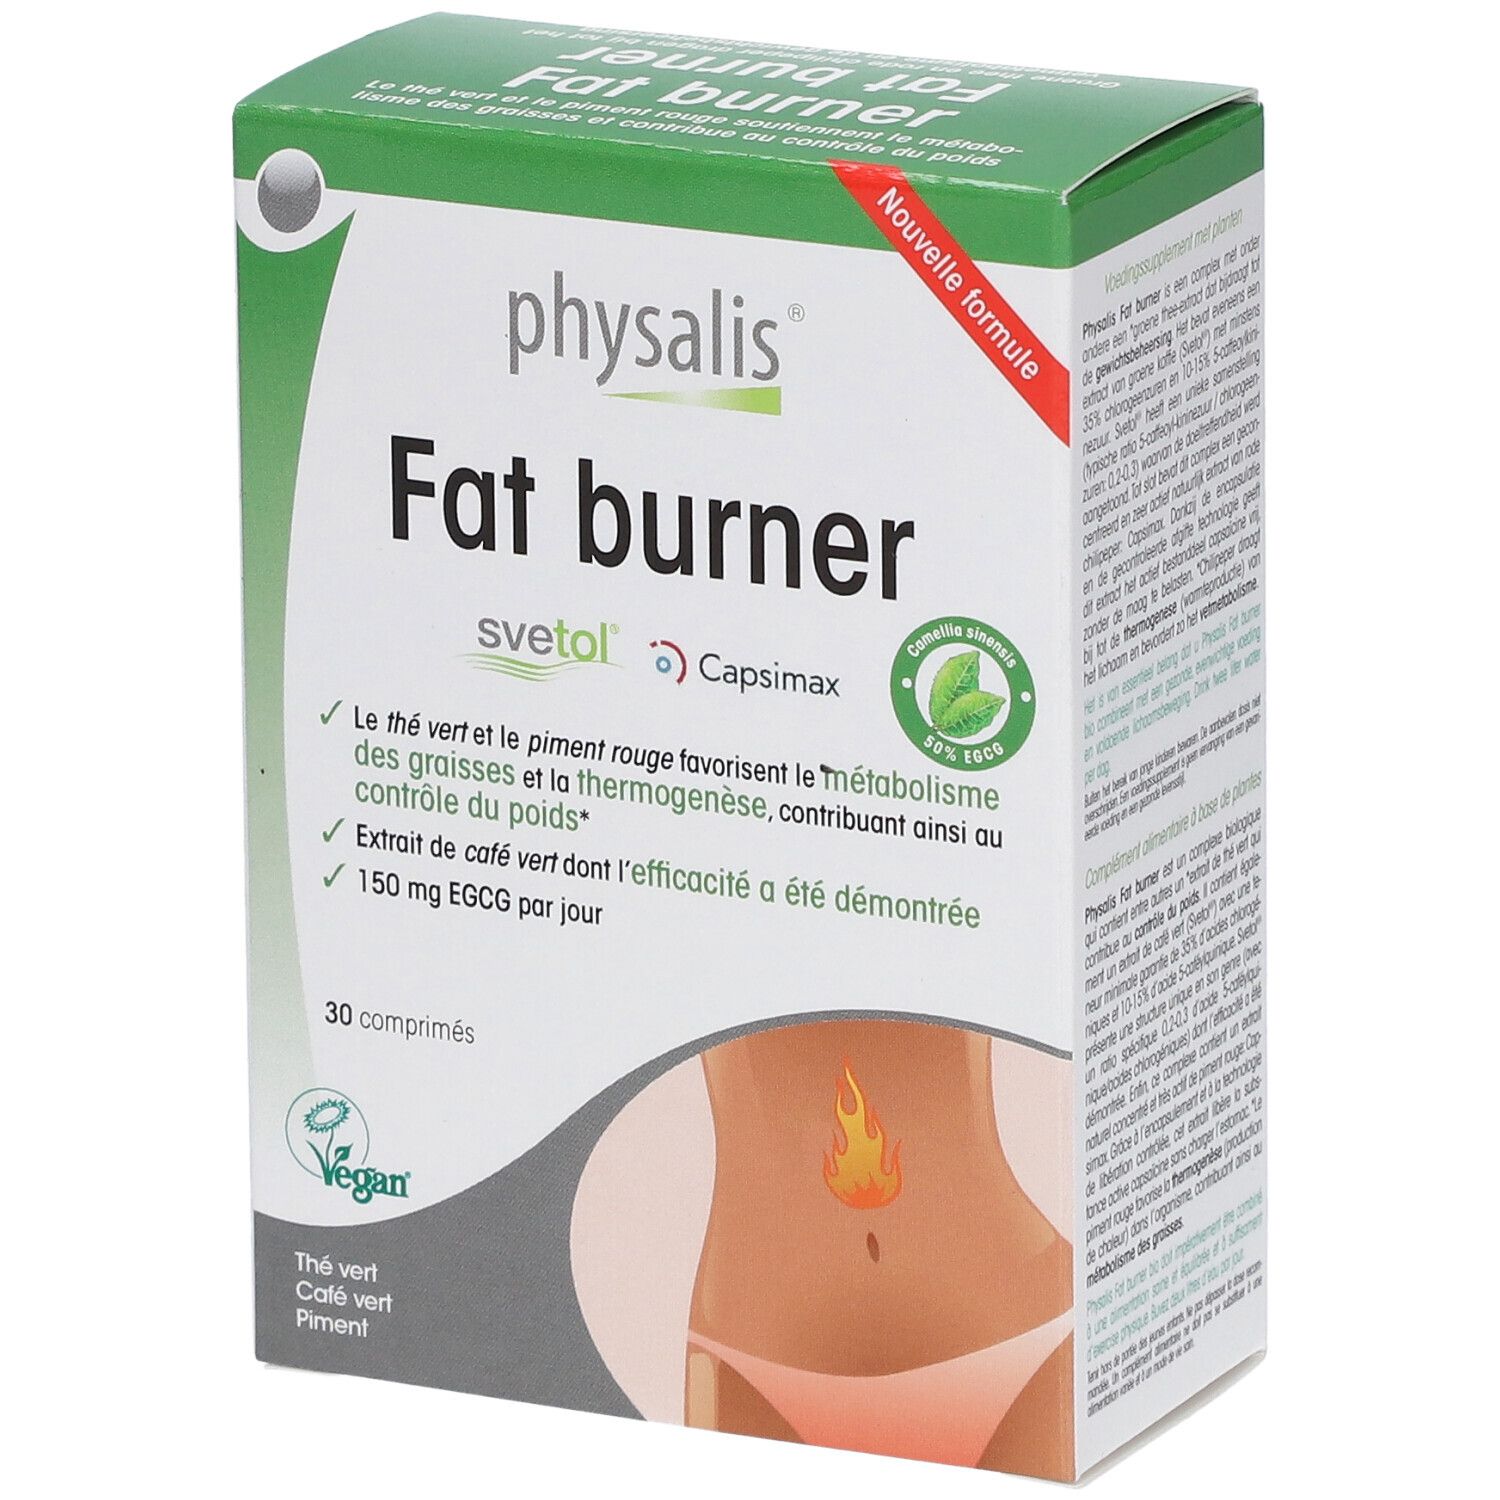 Physalis Fat burner